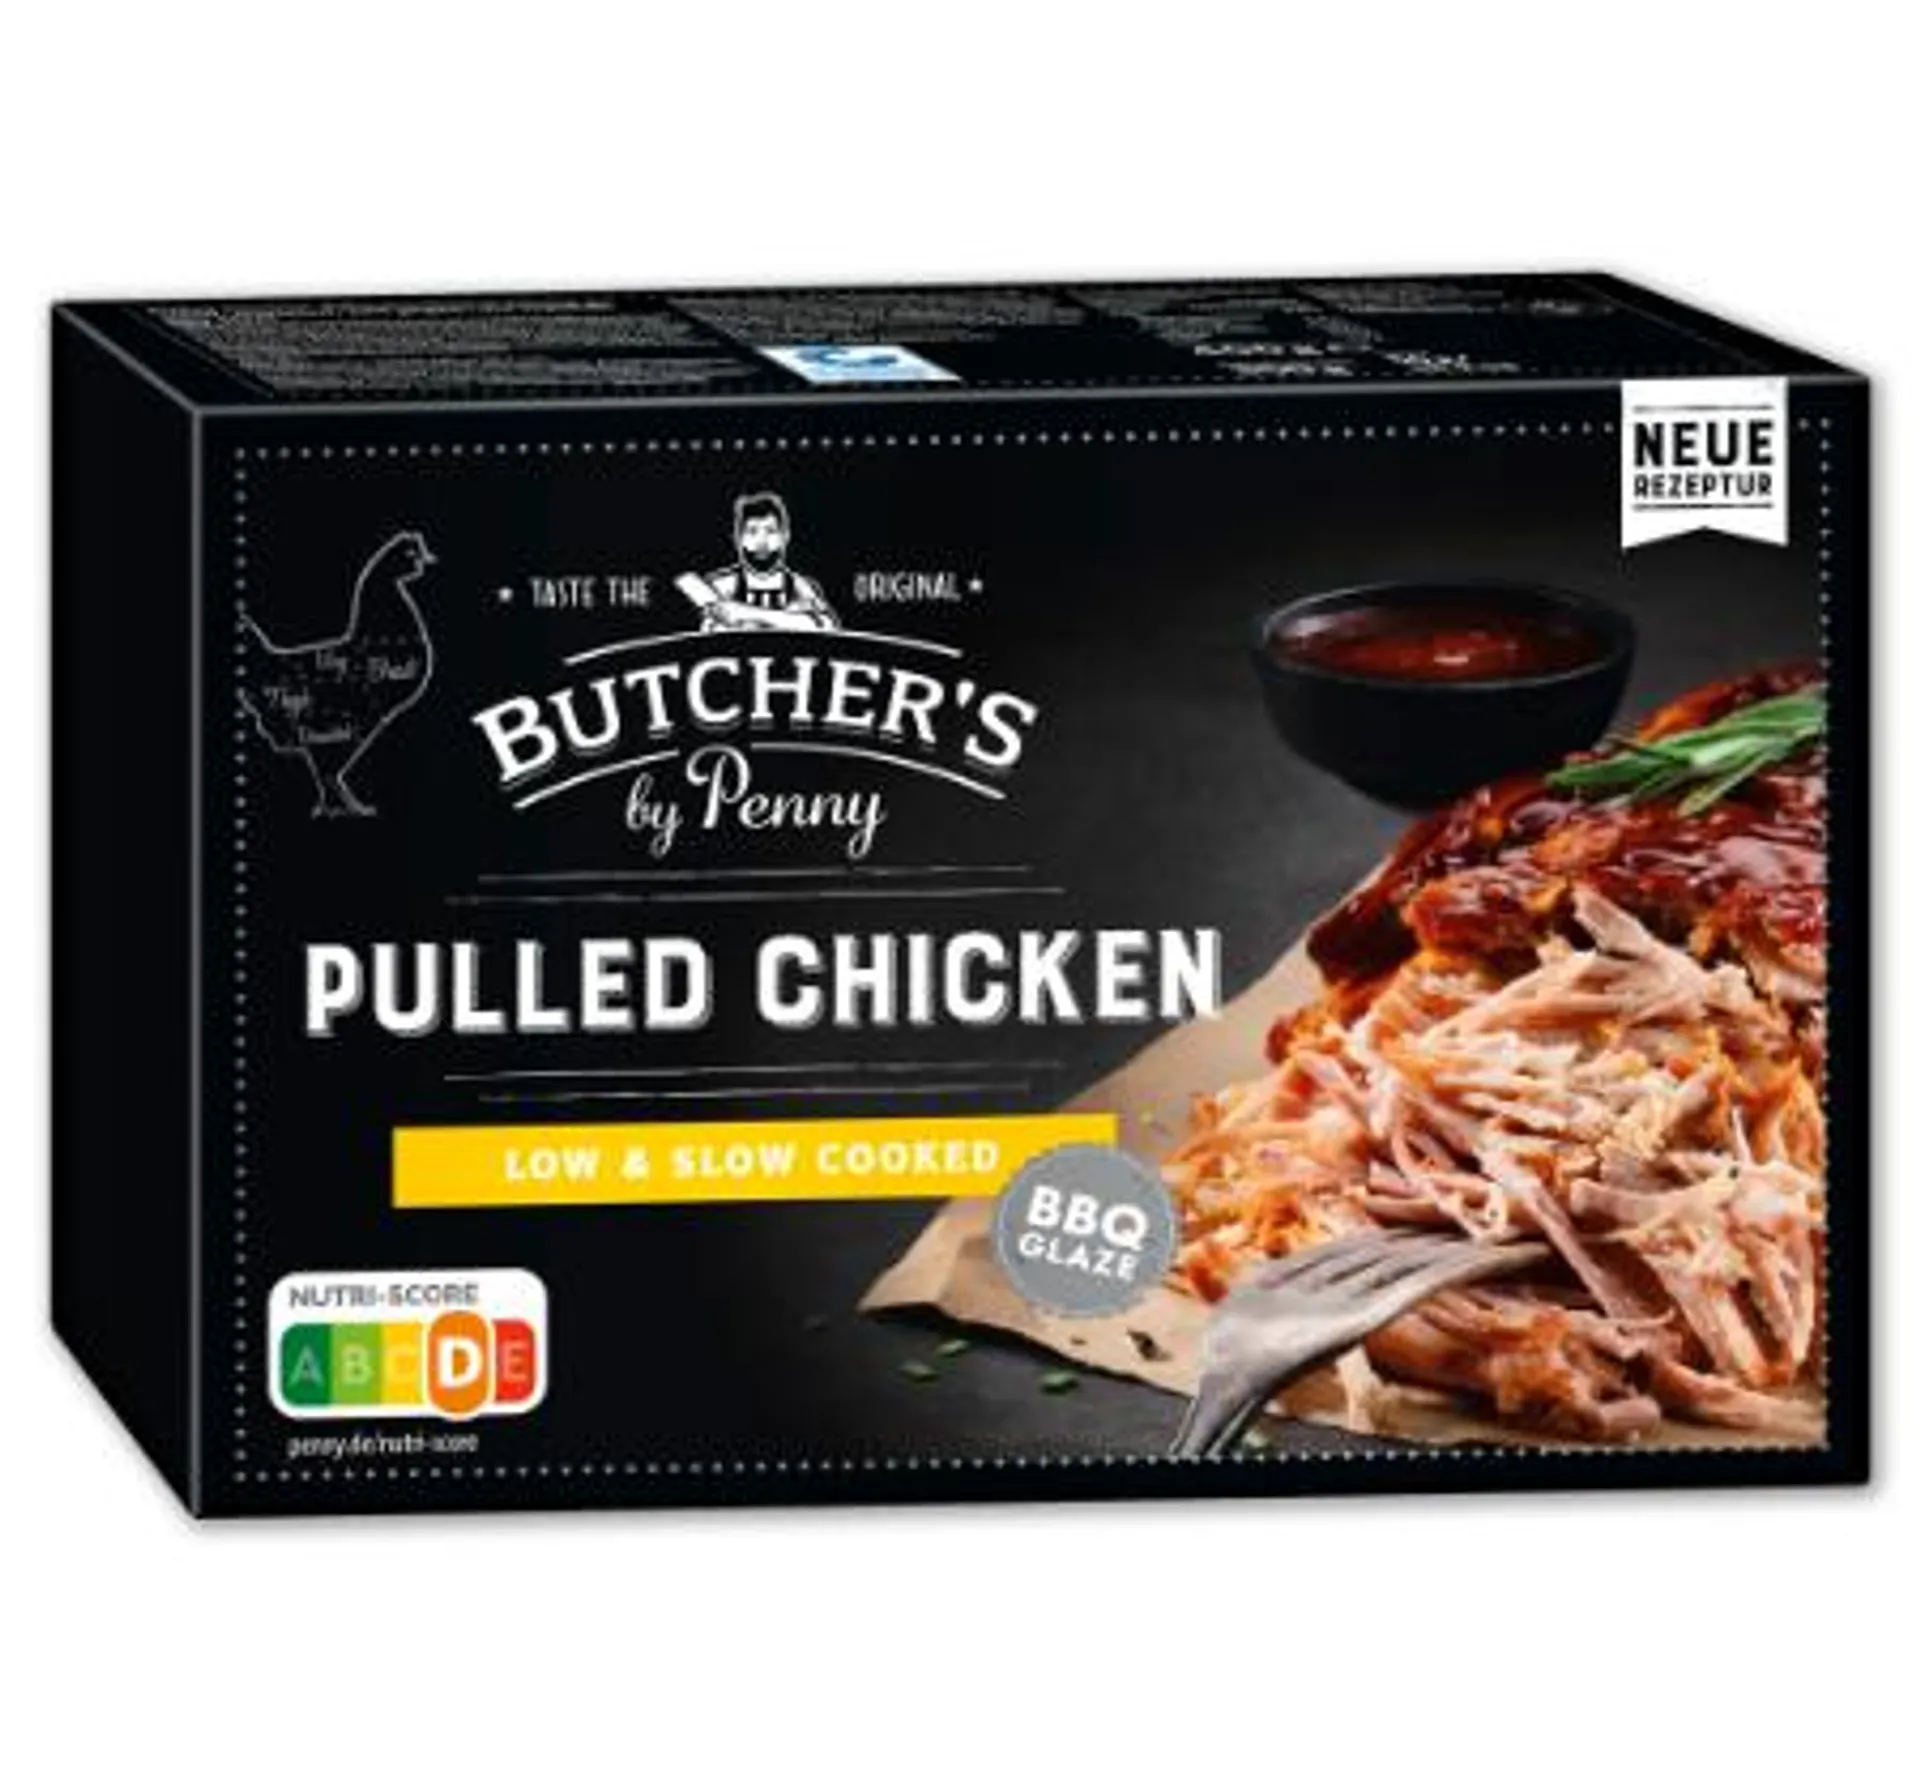 BUTCHER’S Pulled Chicken*